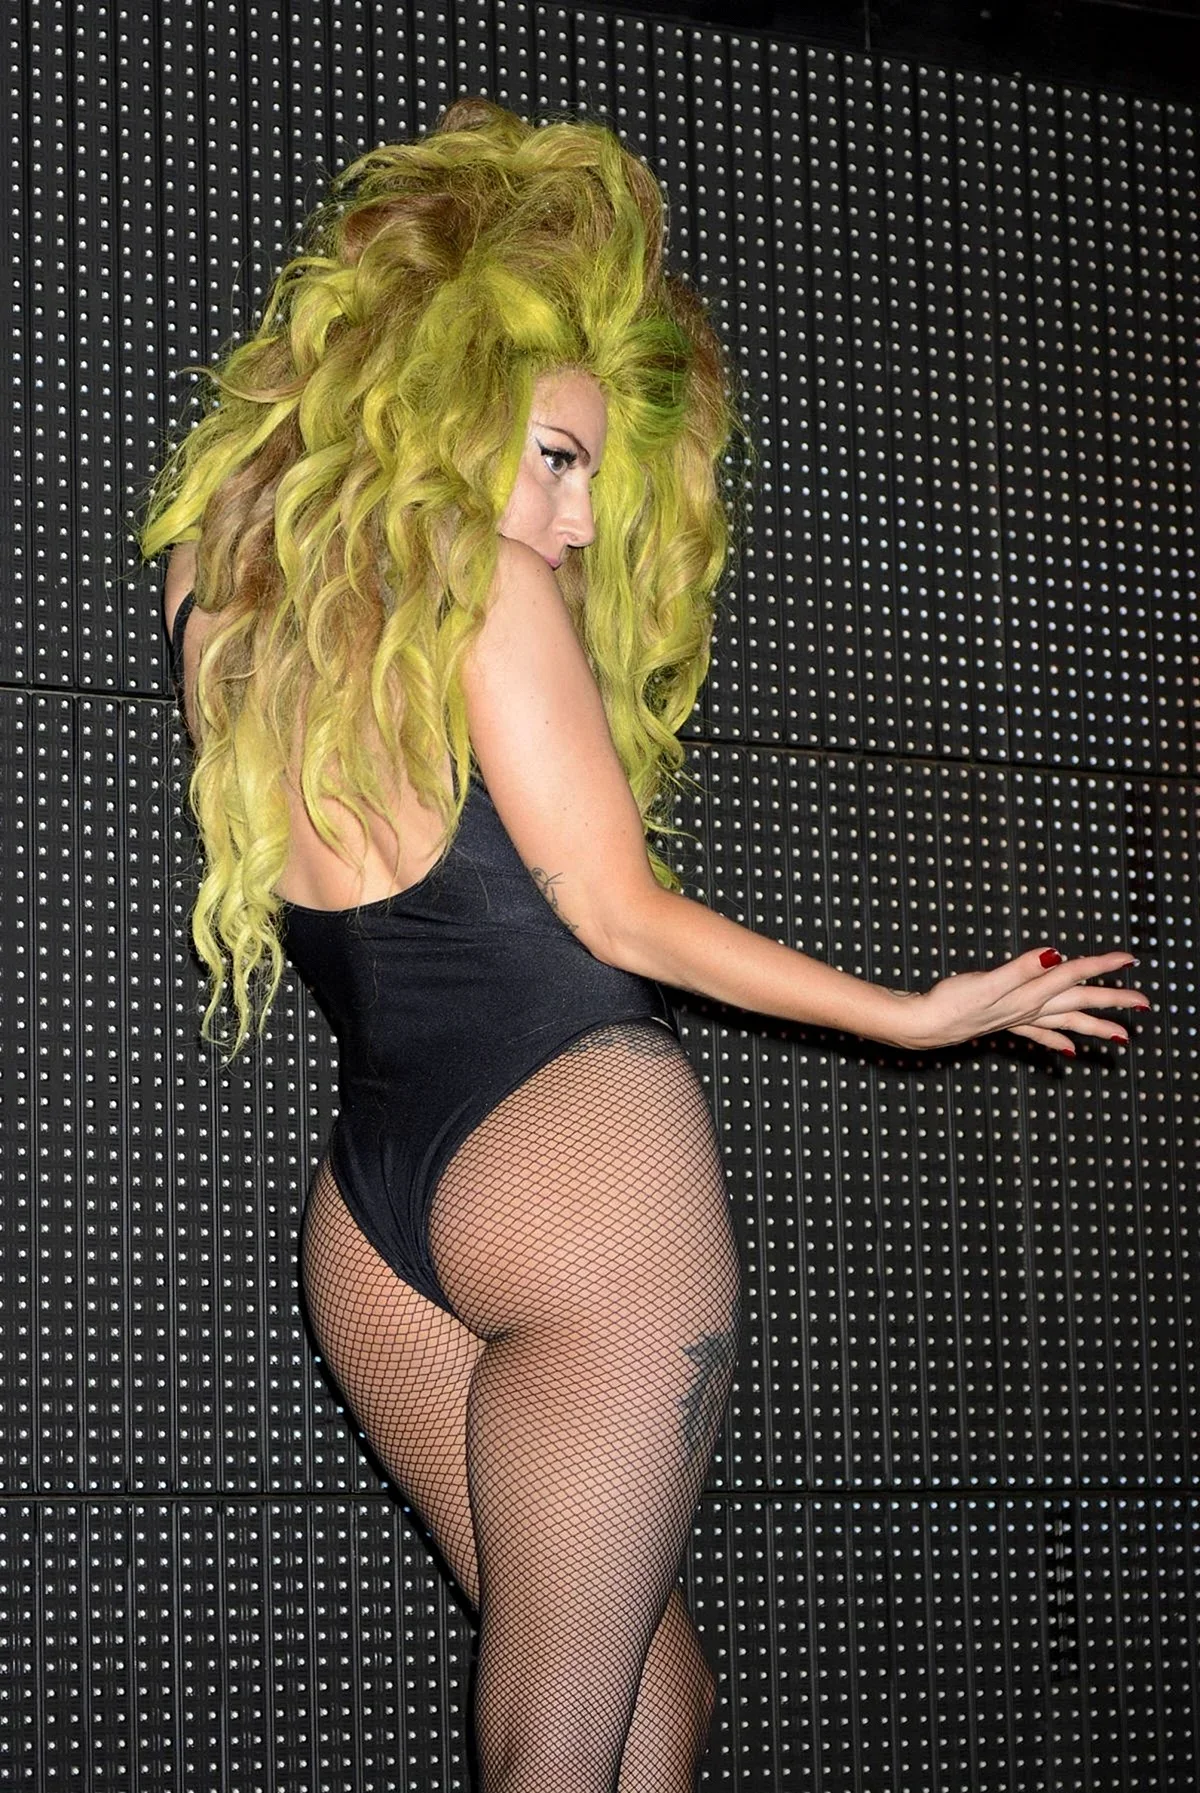 Lady Gaga Butt Wallpaper